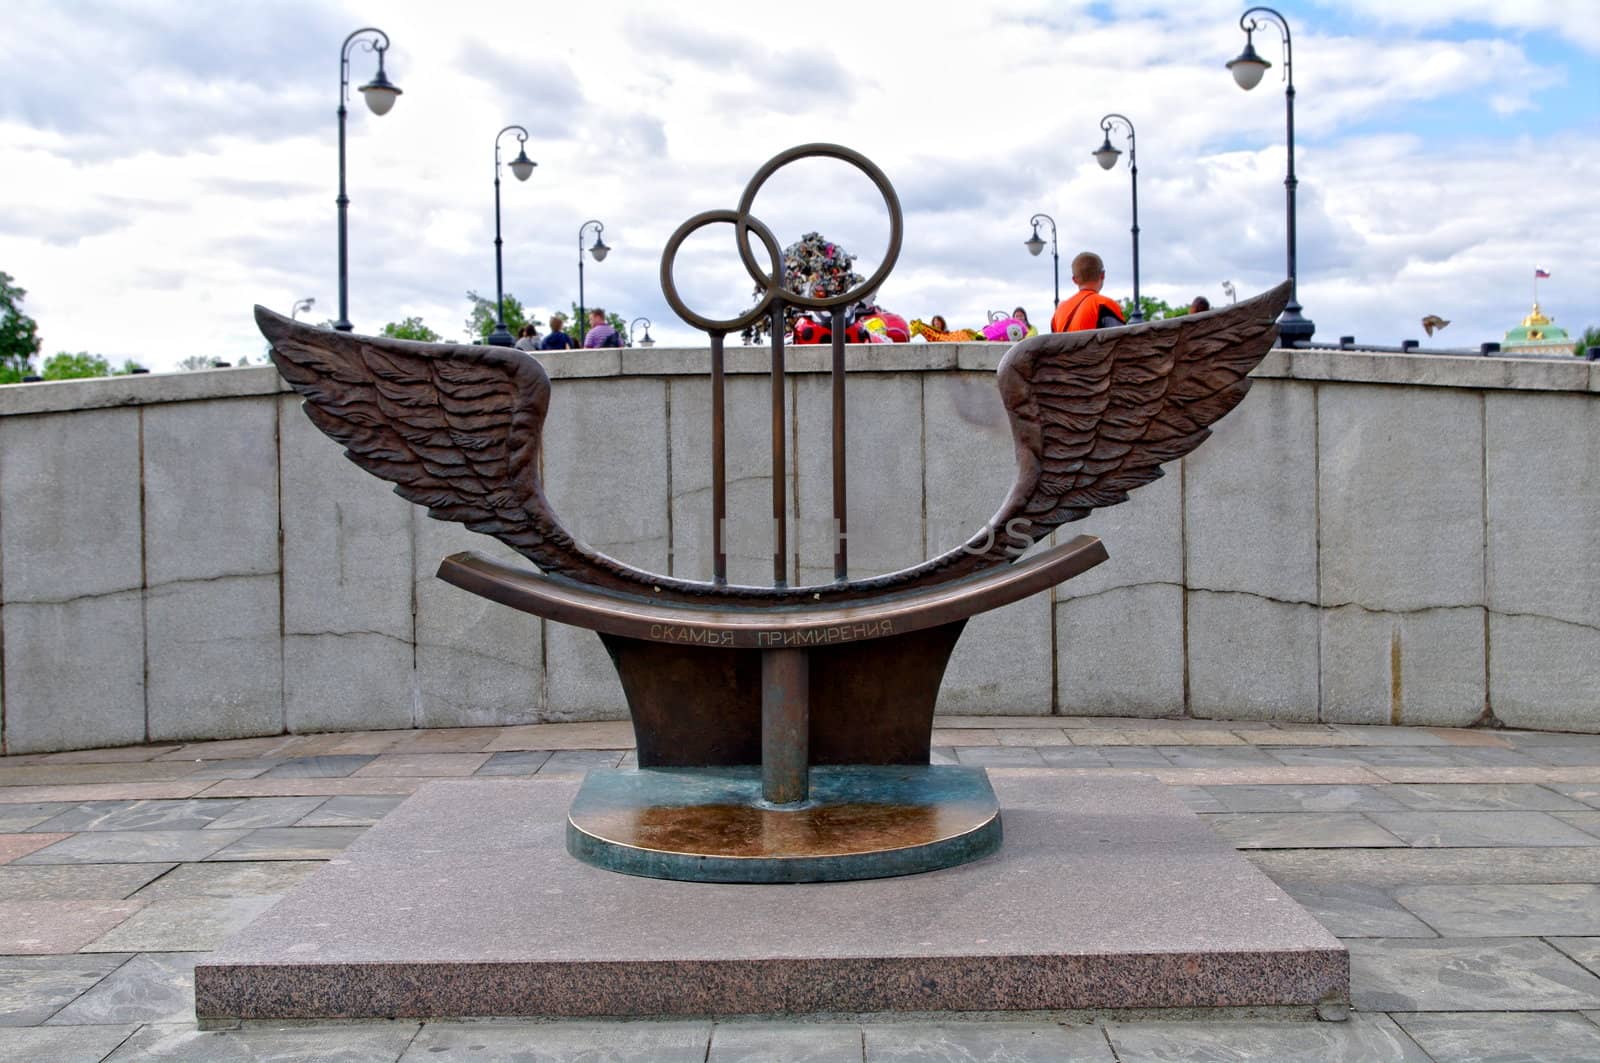 Bench of reconciliation in Luzhkov bridge, Moscow, Russia